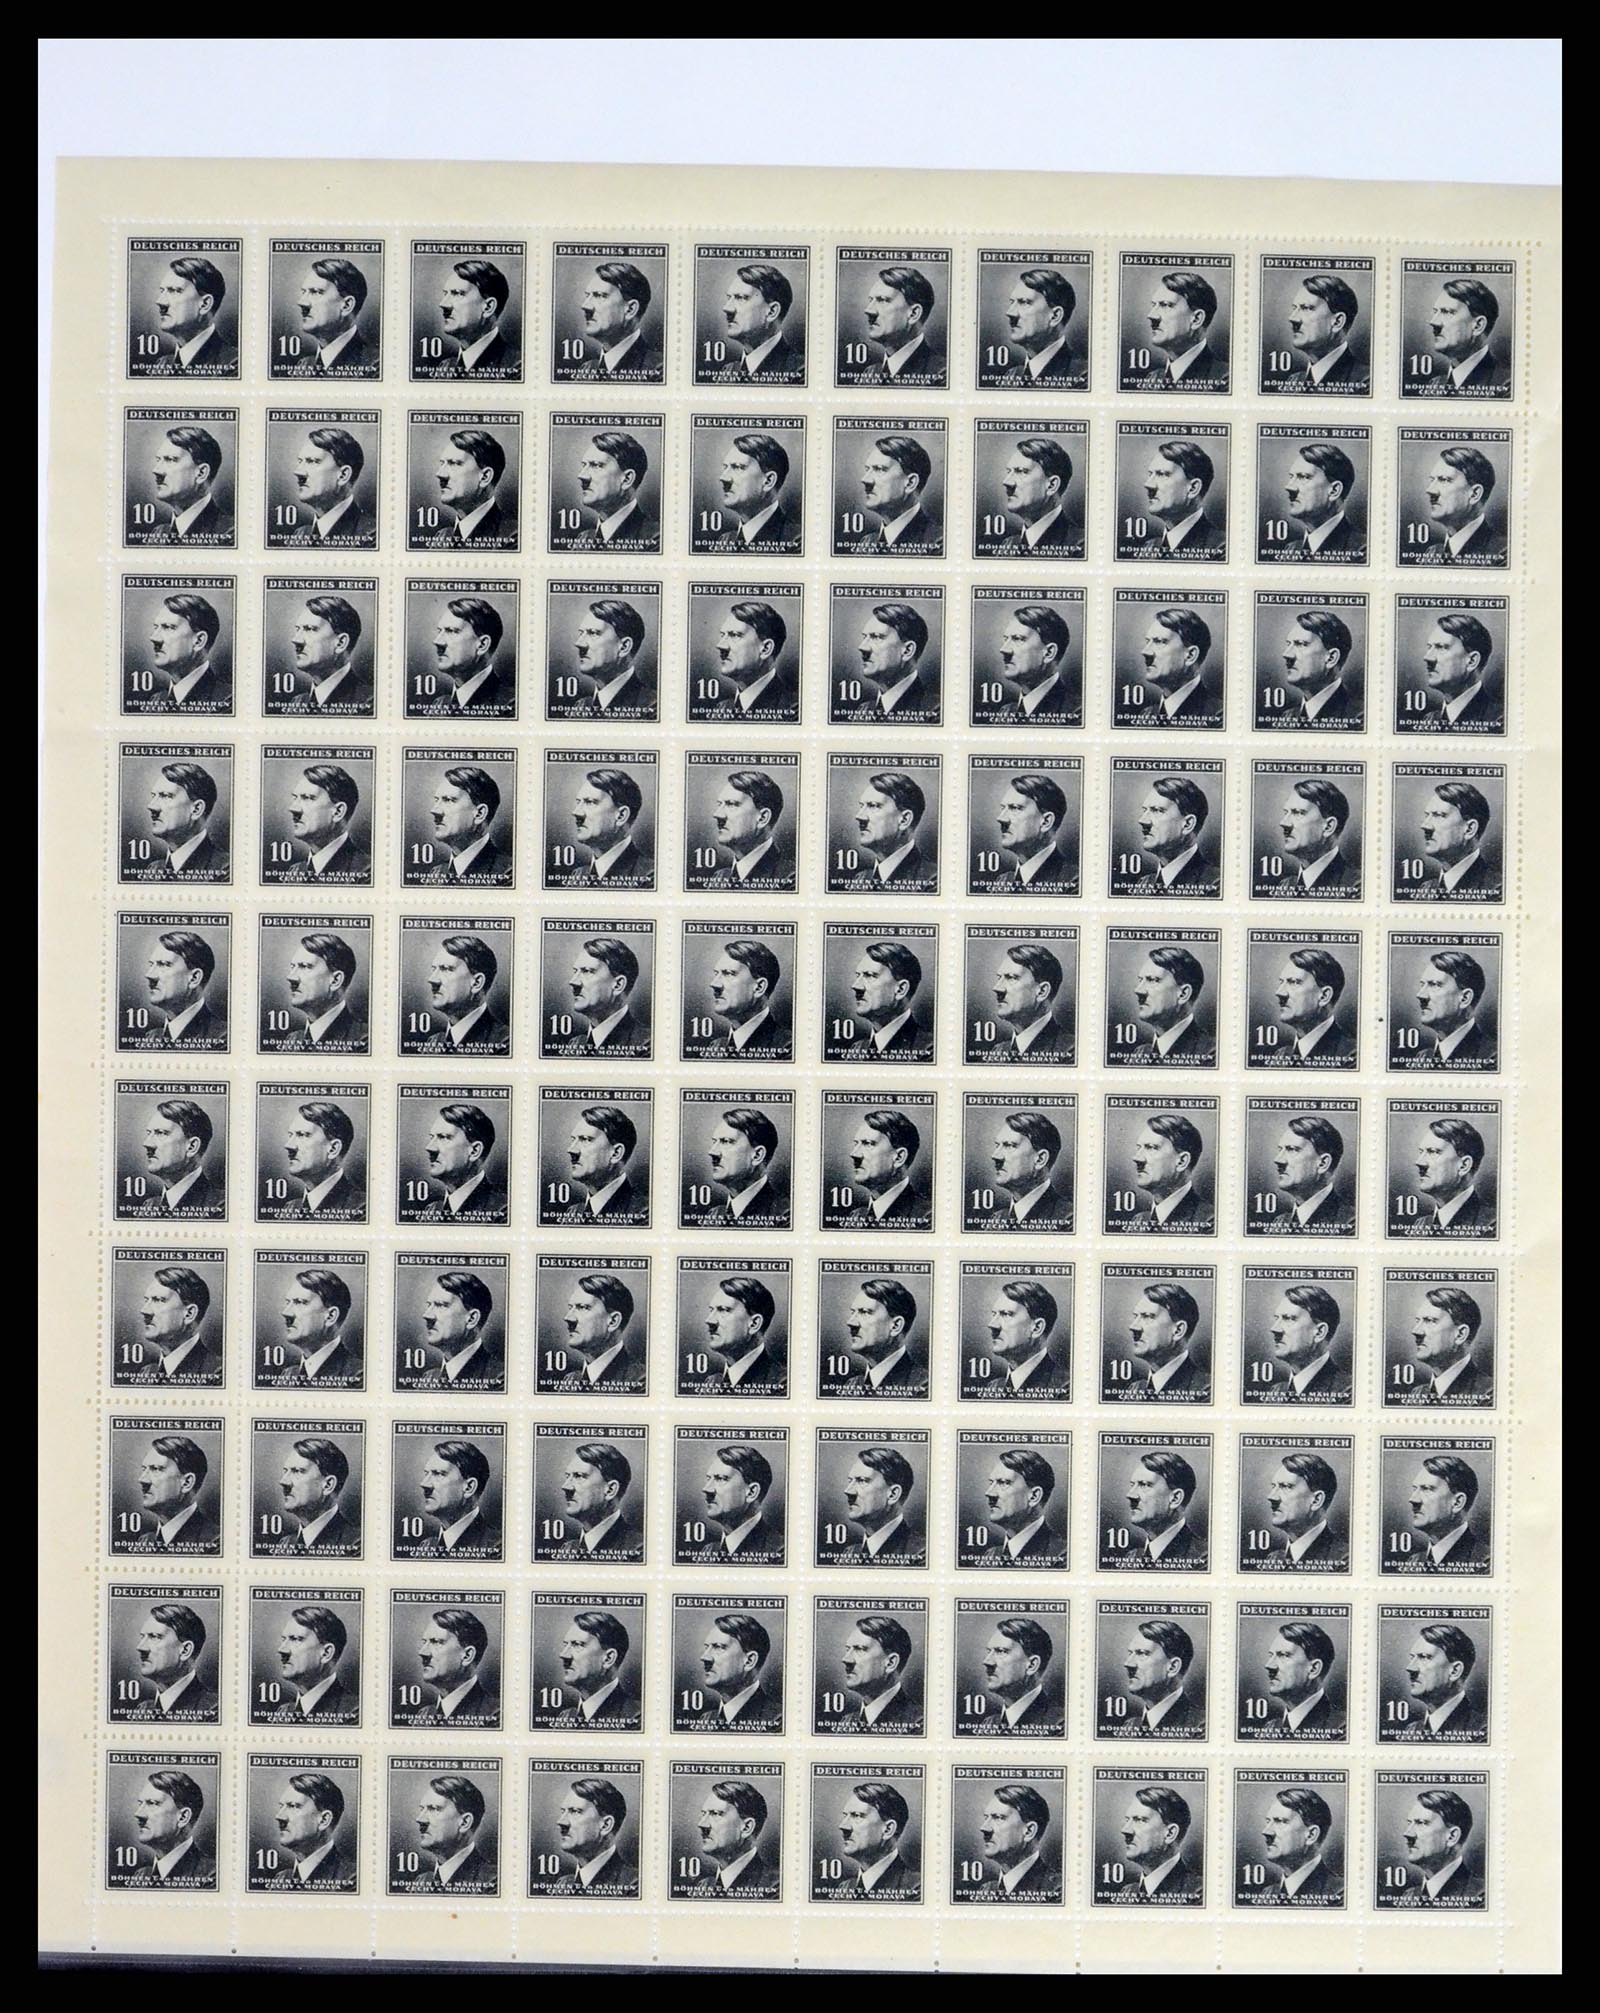 37535 019 - Stamp collection 37535 German occupation second worldwar 1939-1945.